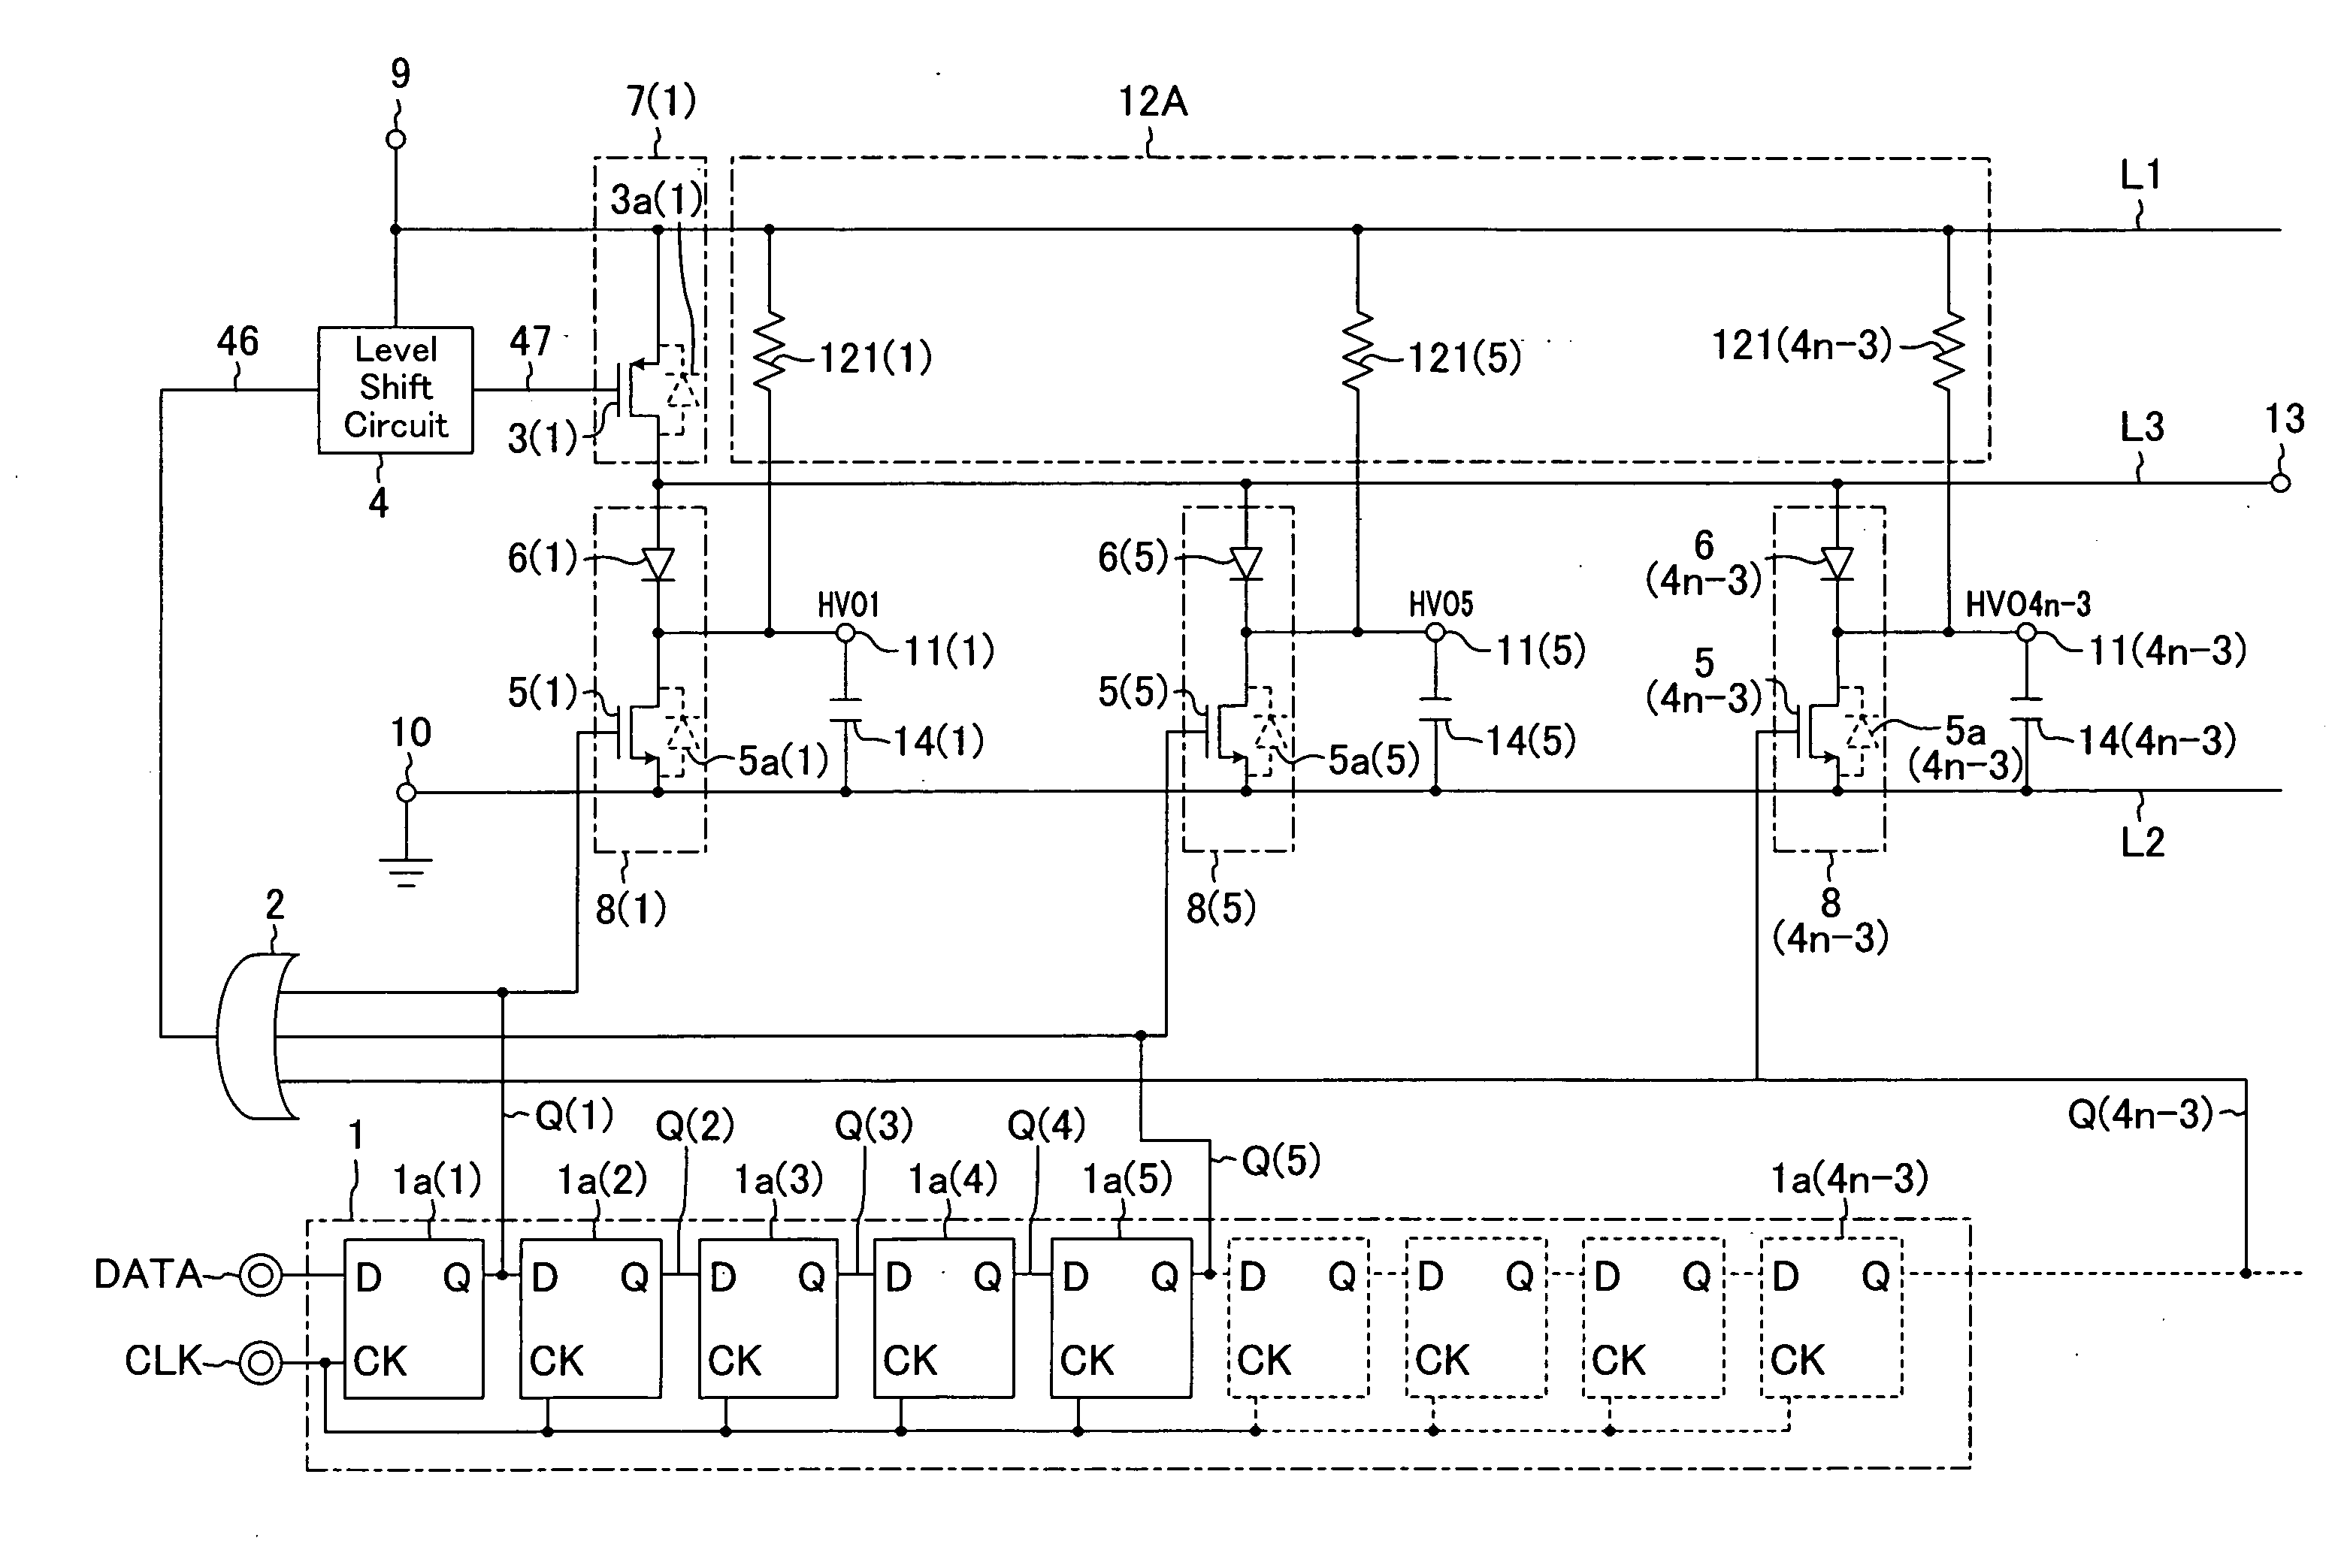 Drive voltage supply circuit